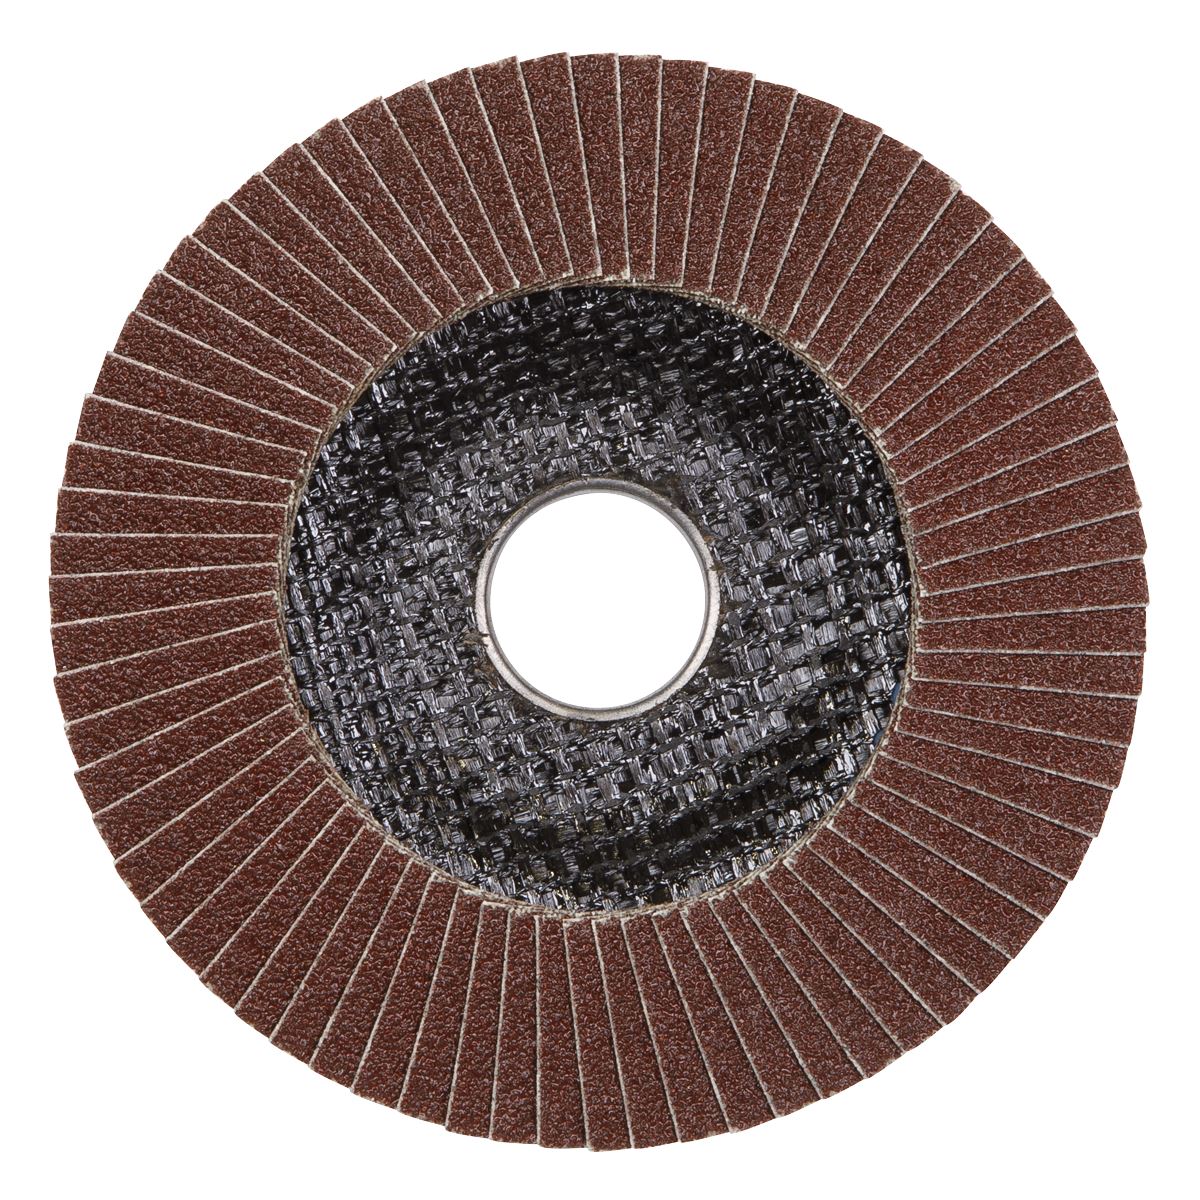 Sealey Flap Disc Aluminium Oxide Ø100mm Ø16mm Bore 40Grit